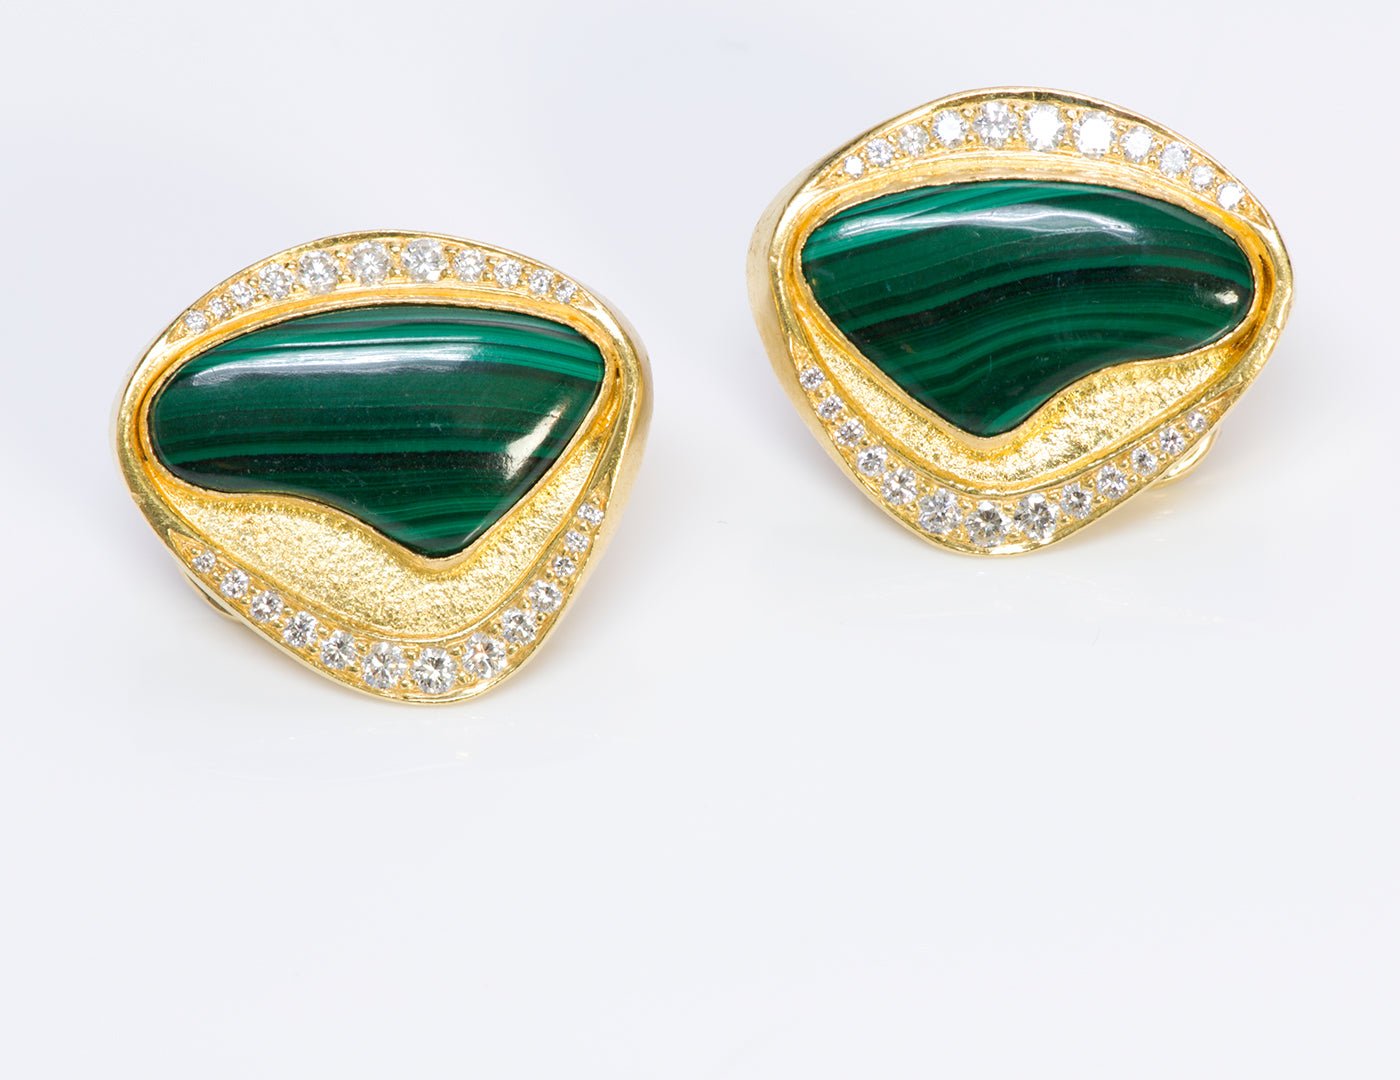 Malachite Diamond 22K Yellow Gold Pendant Earrings Set